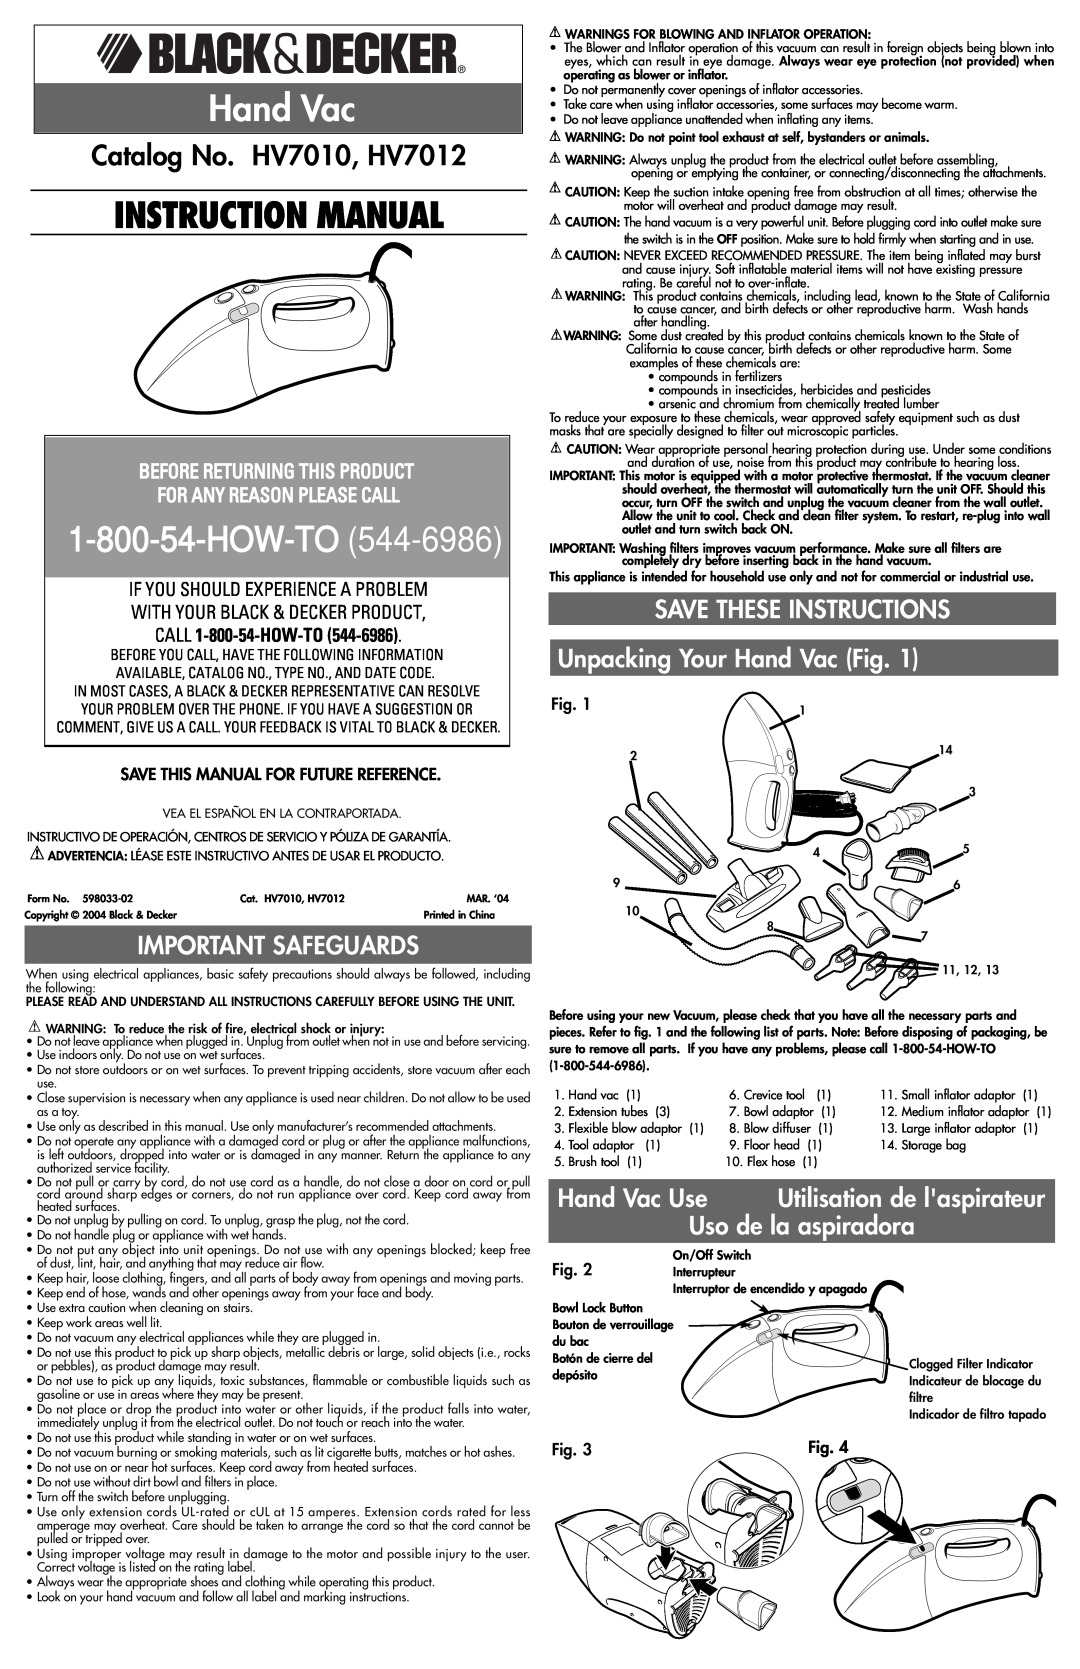 Black & Decker instruction manual Catalog No. HV7010, HV7012, Important Safeguards, Hand Vac Use, HOW-TO 544 